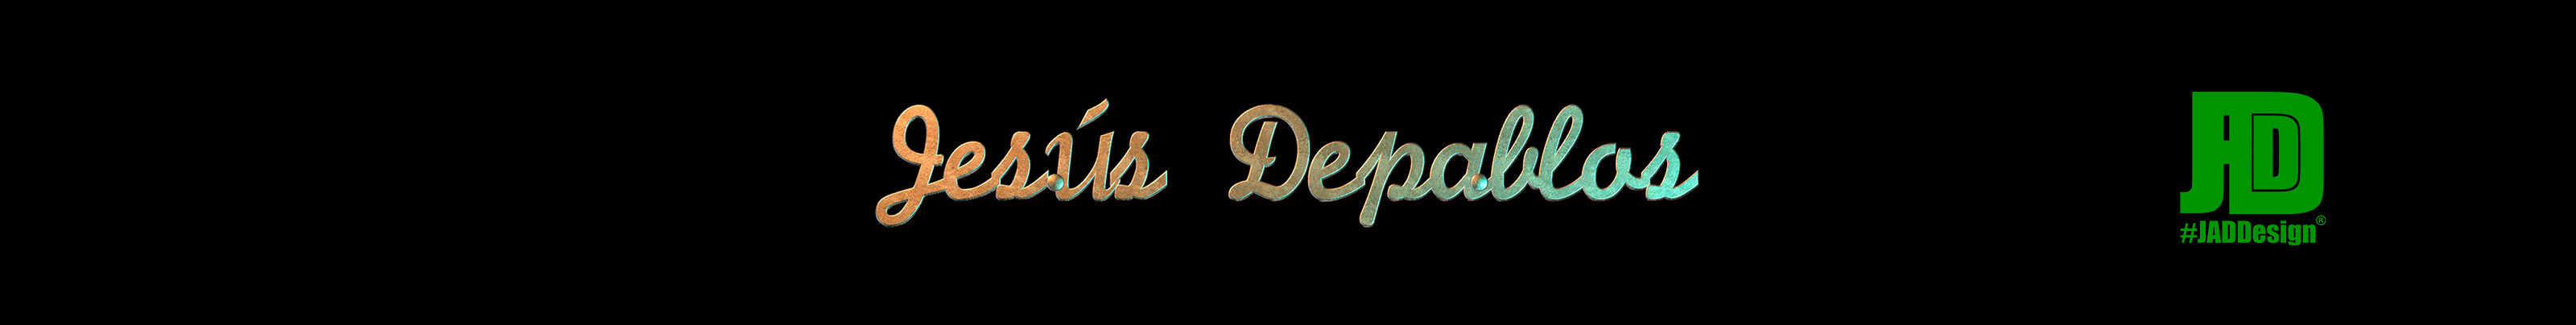 Banner de perfil de Jesús Depablos JADDesign®